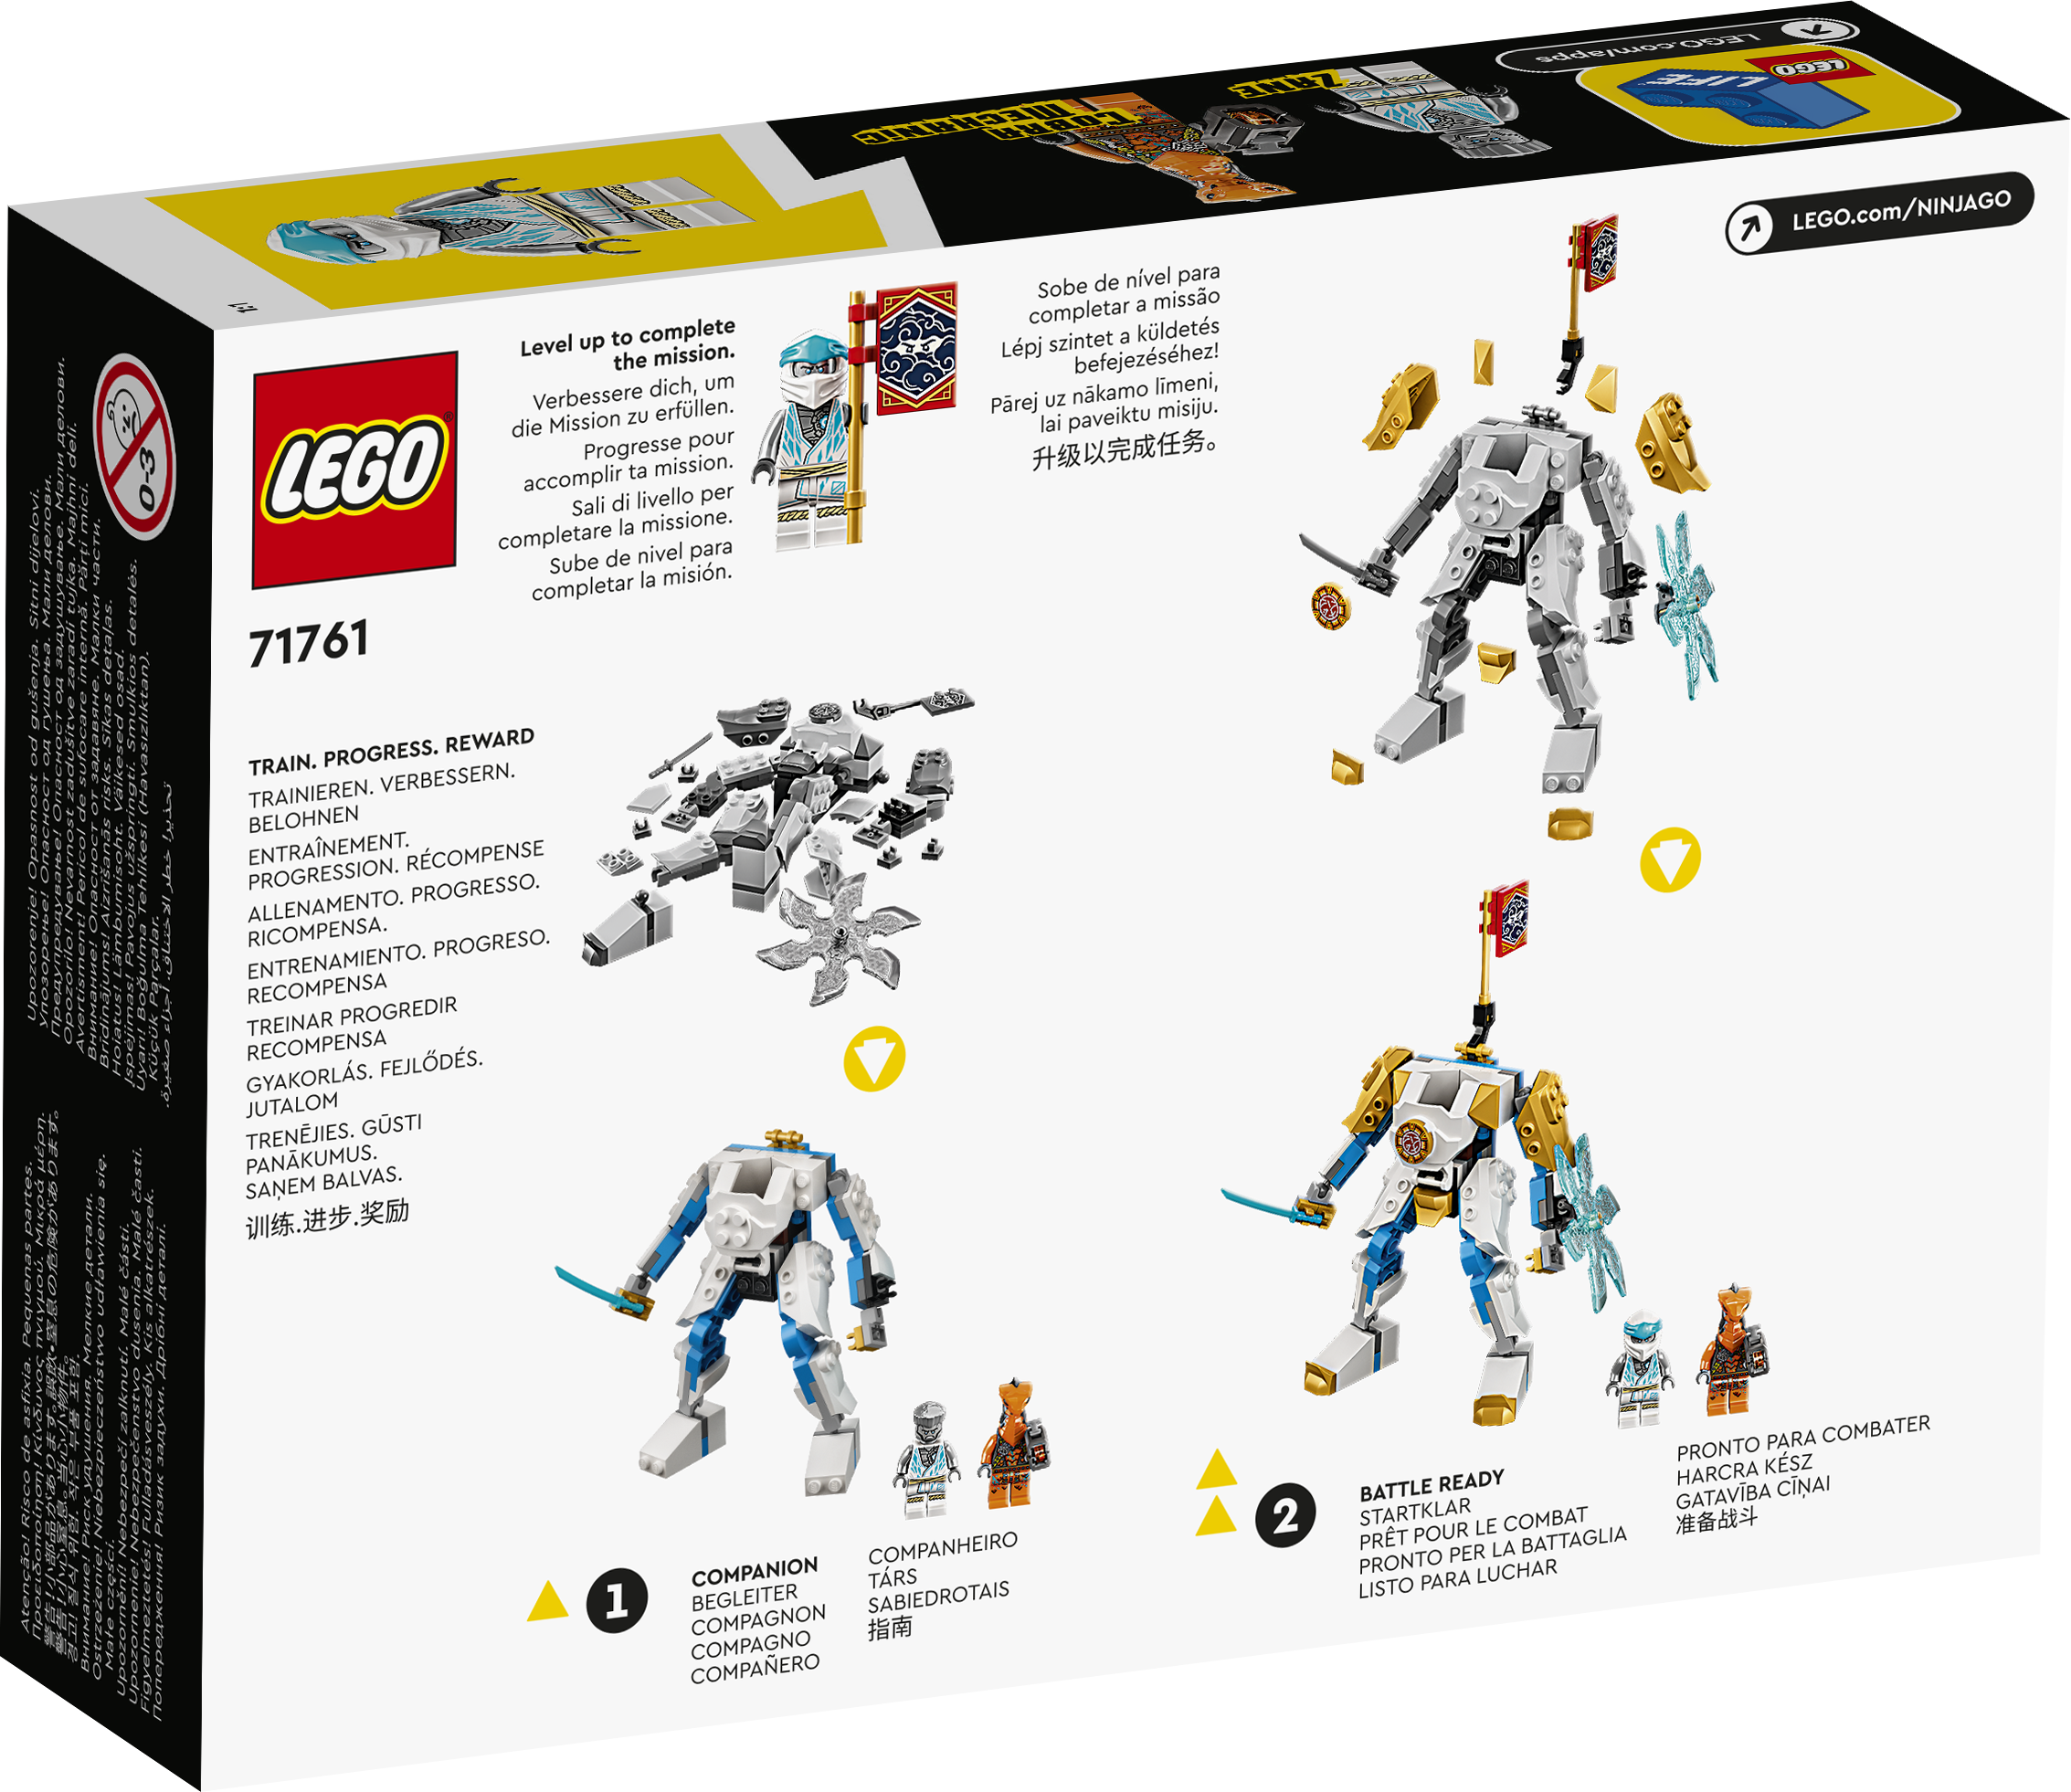 LEGO® NINJAGO 71761 Zanes Power-Up-Mech EVO